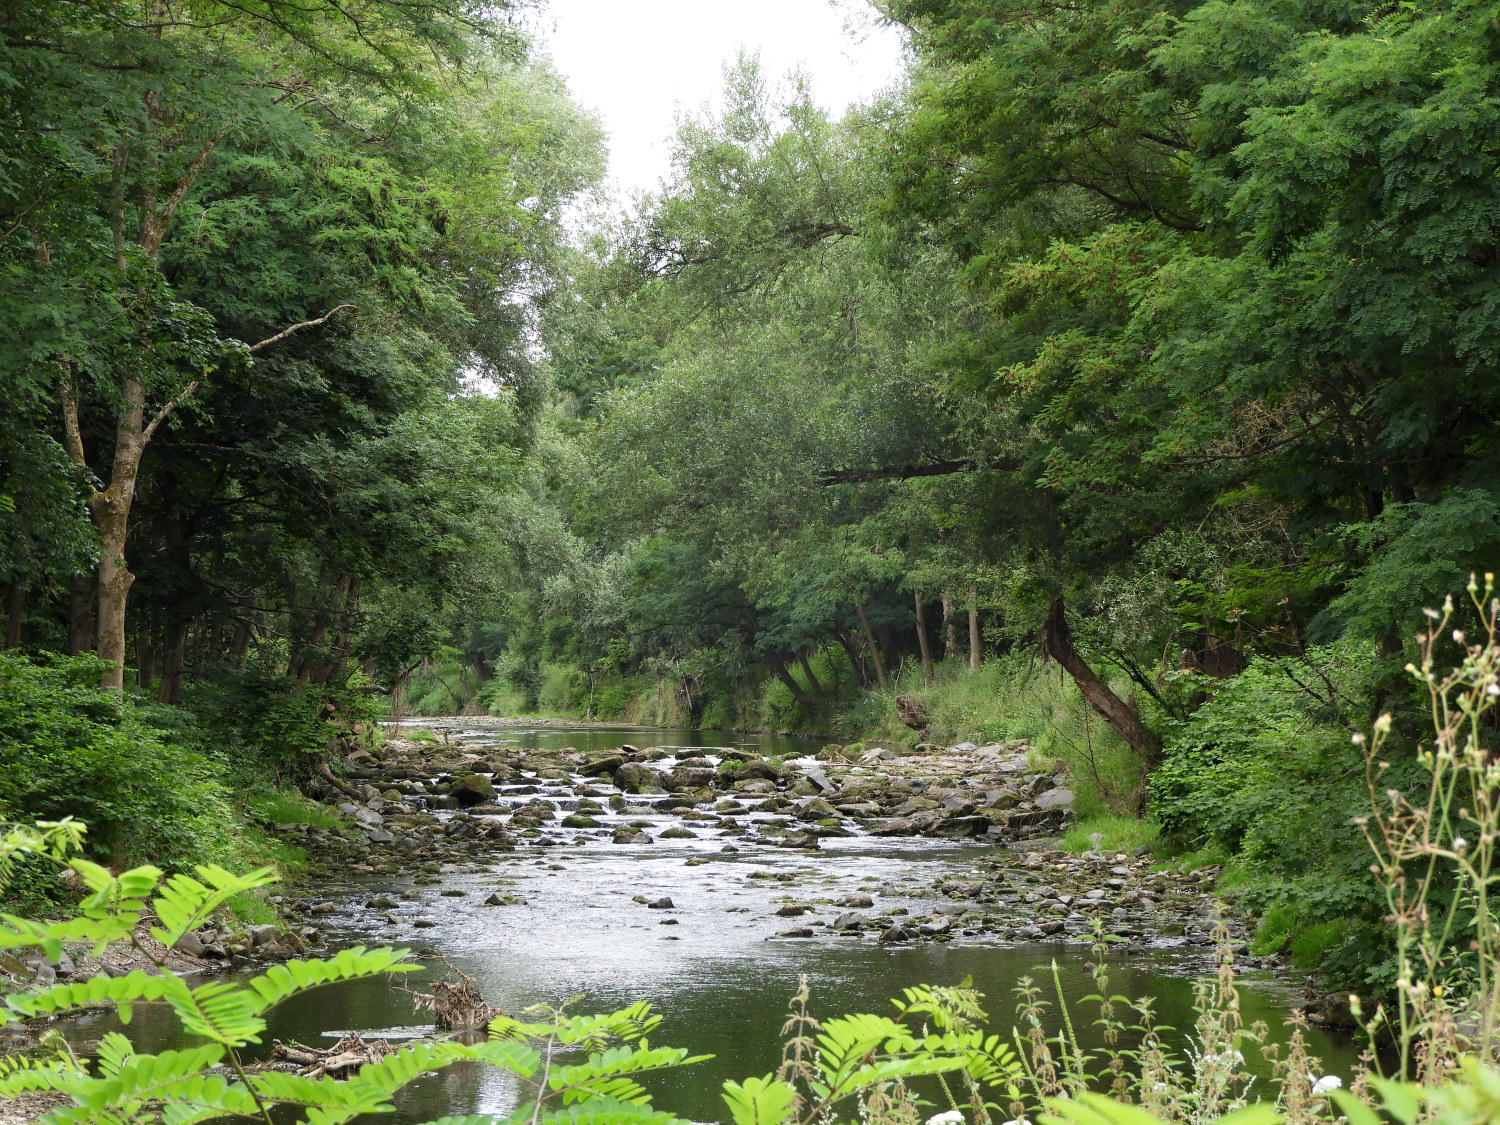 The Ahr river near Sinzig